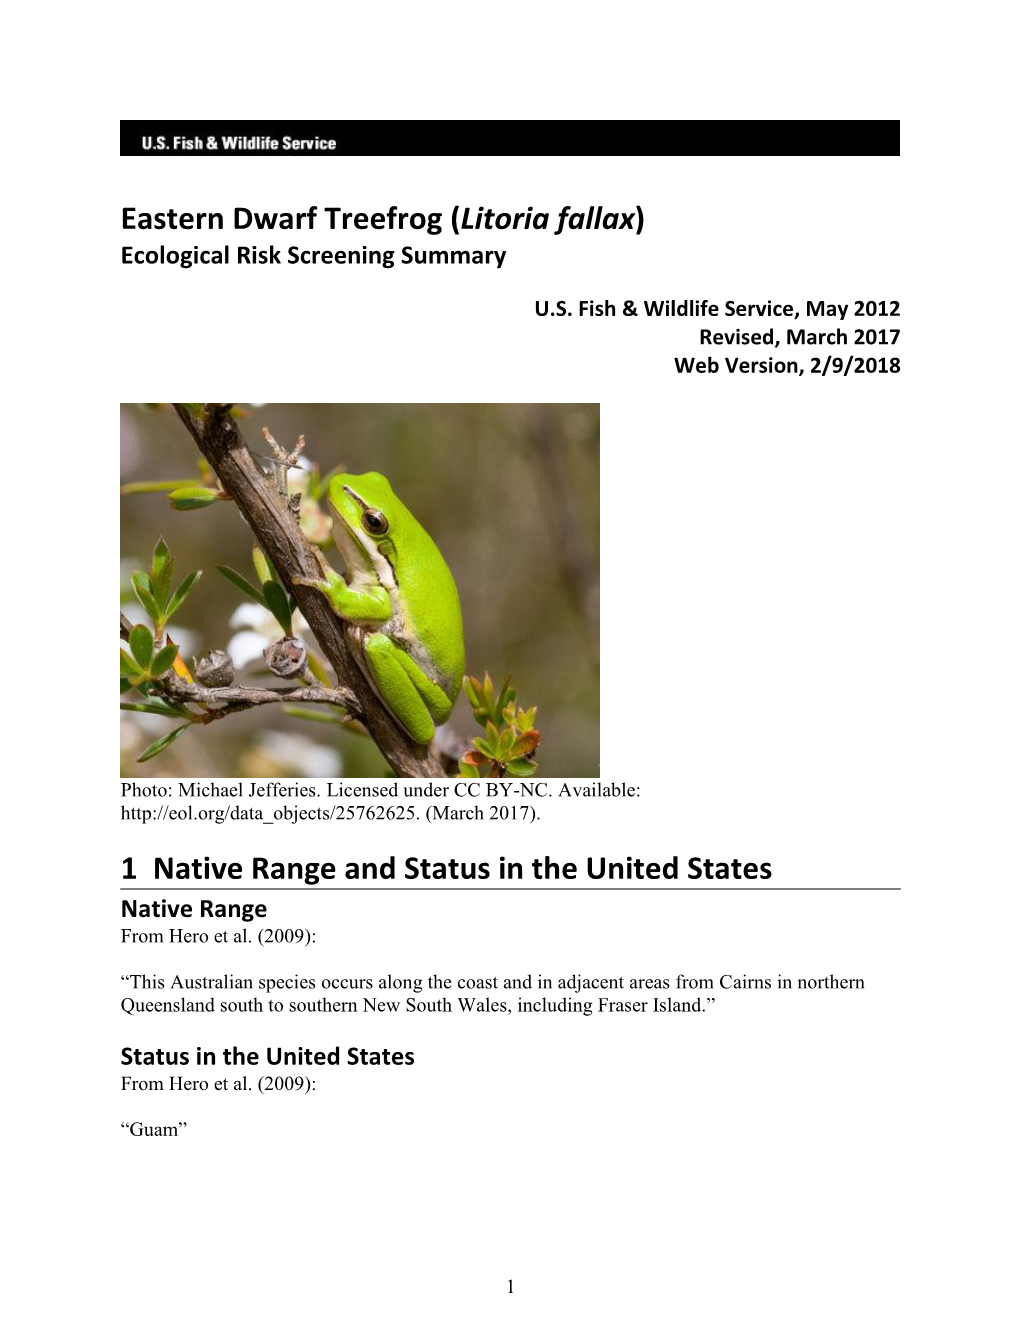 Eastern Dwarf Treefrog (Litoria Fallax) 1 Native Range and Status in the United States